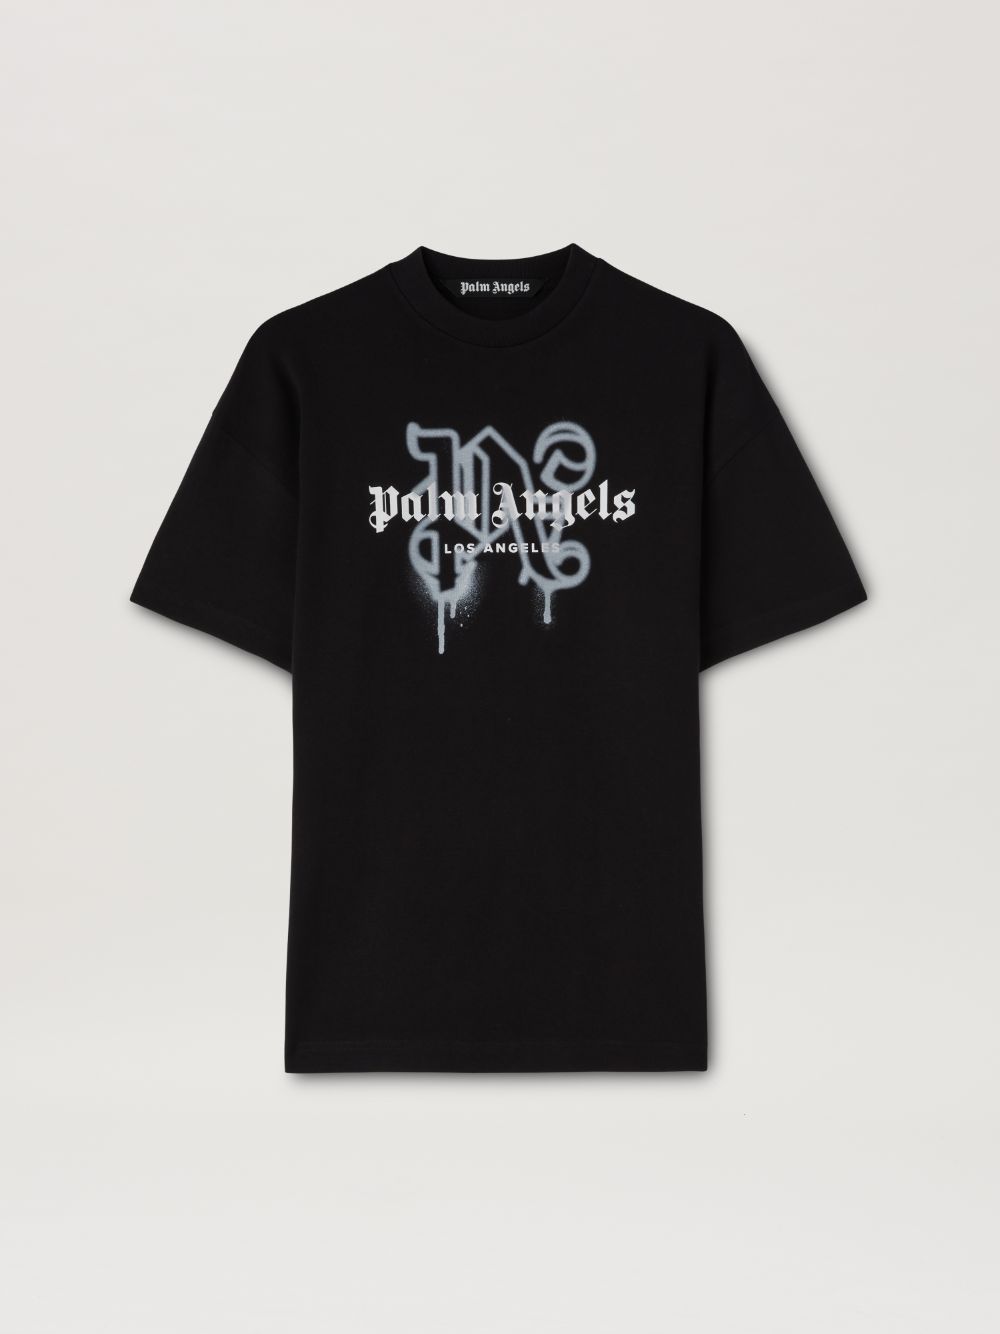 Palm Angels Monogram Spray City T-shirt Los Angels In Black